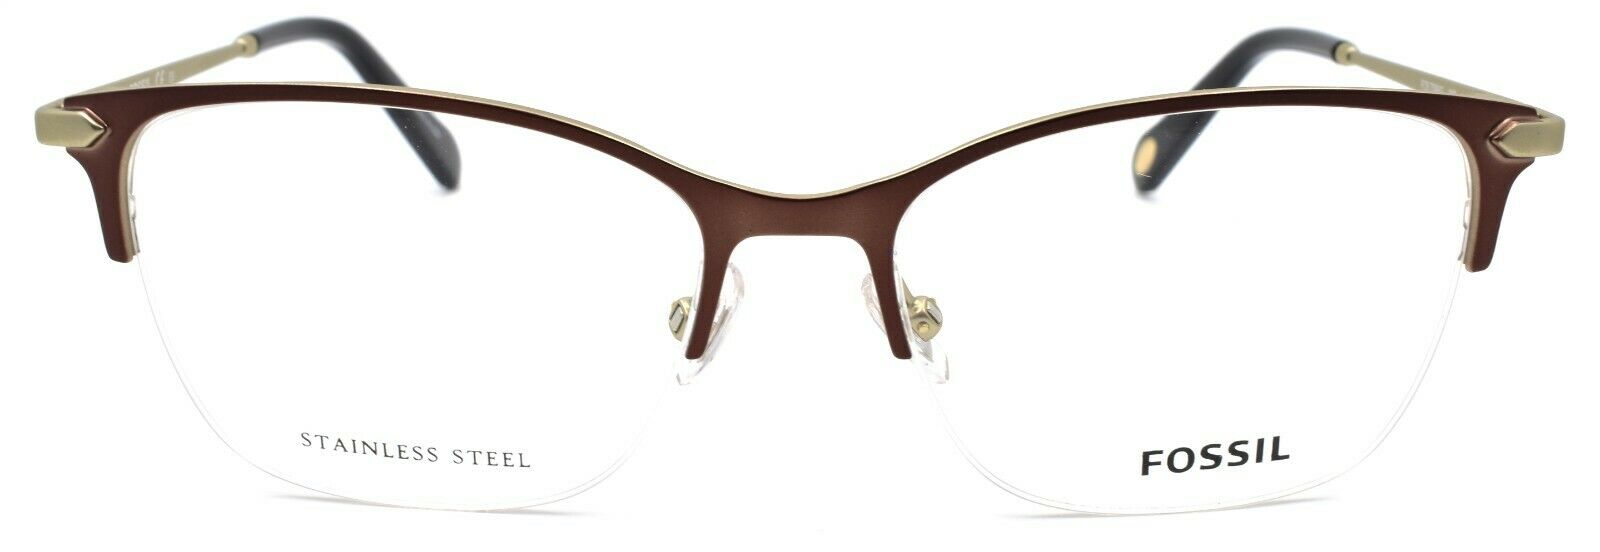 2-Fossil FOS 7088 09Q Women's Eyeglasses Frames Half-rim 51-16-140 Brown-716736295688-IKSpecs